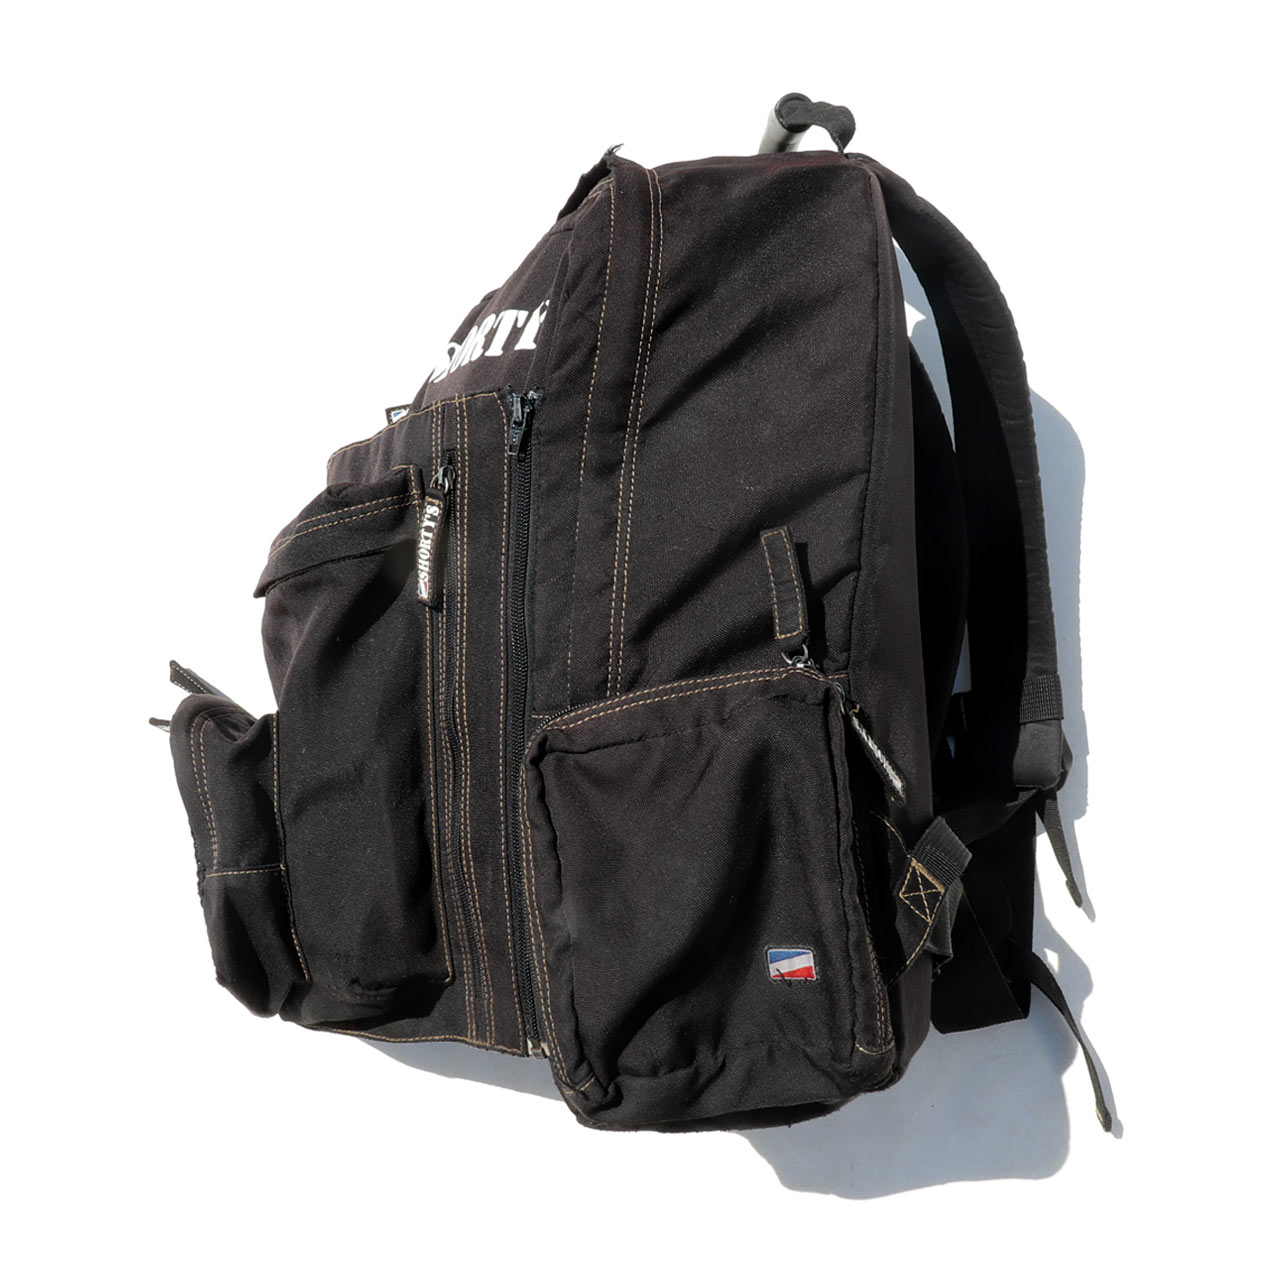 〔Vintage〕90s 2tone Champion backpack